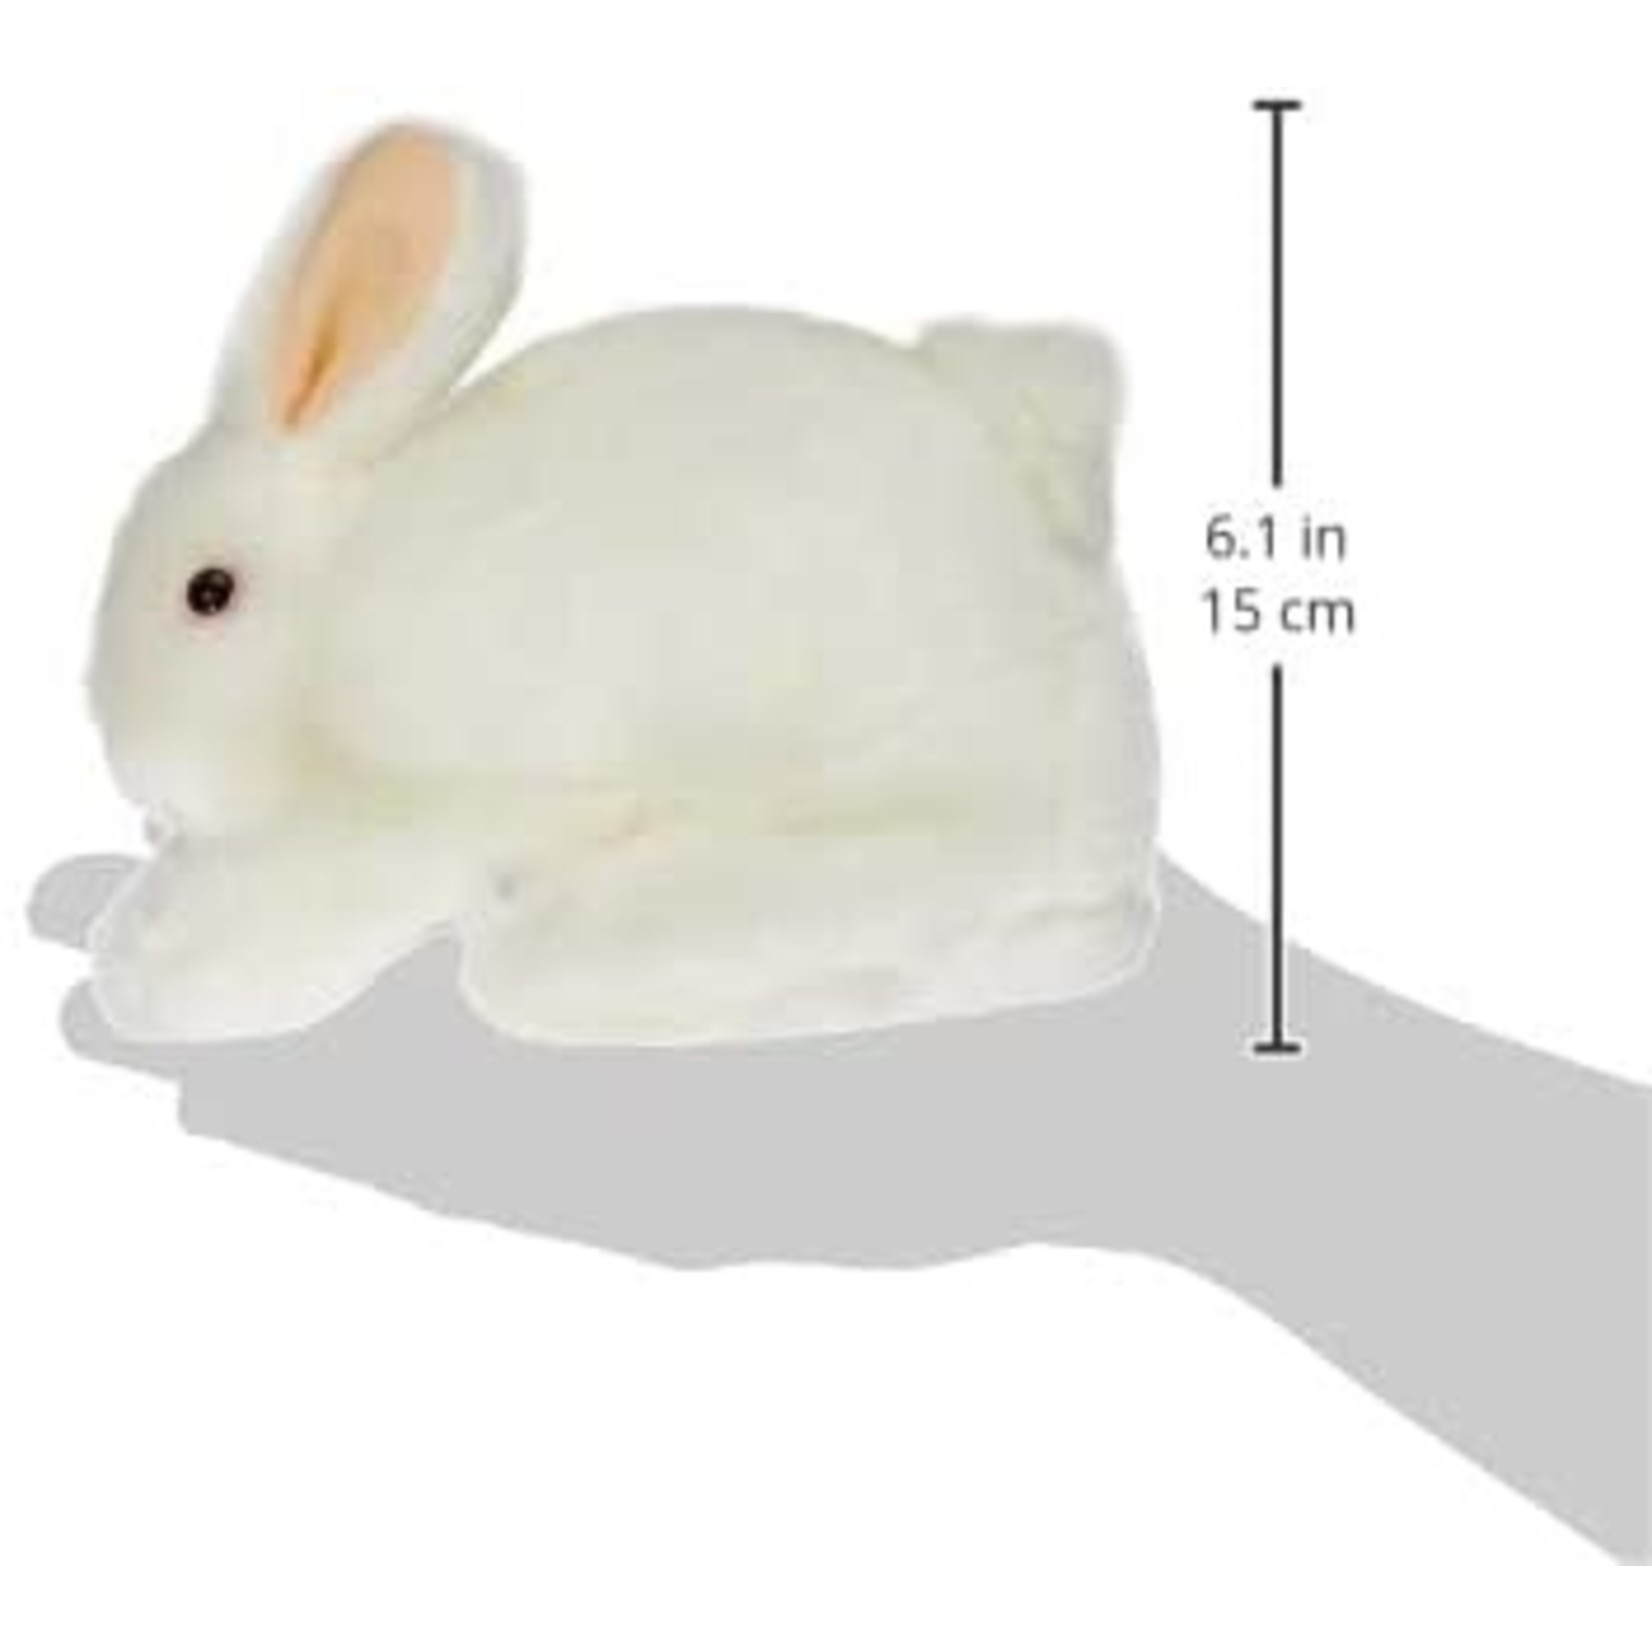 White Bunny Rabbit Hand Puppet